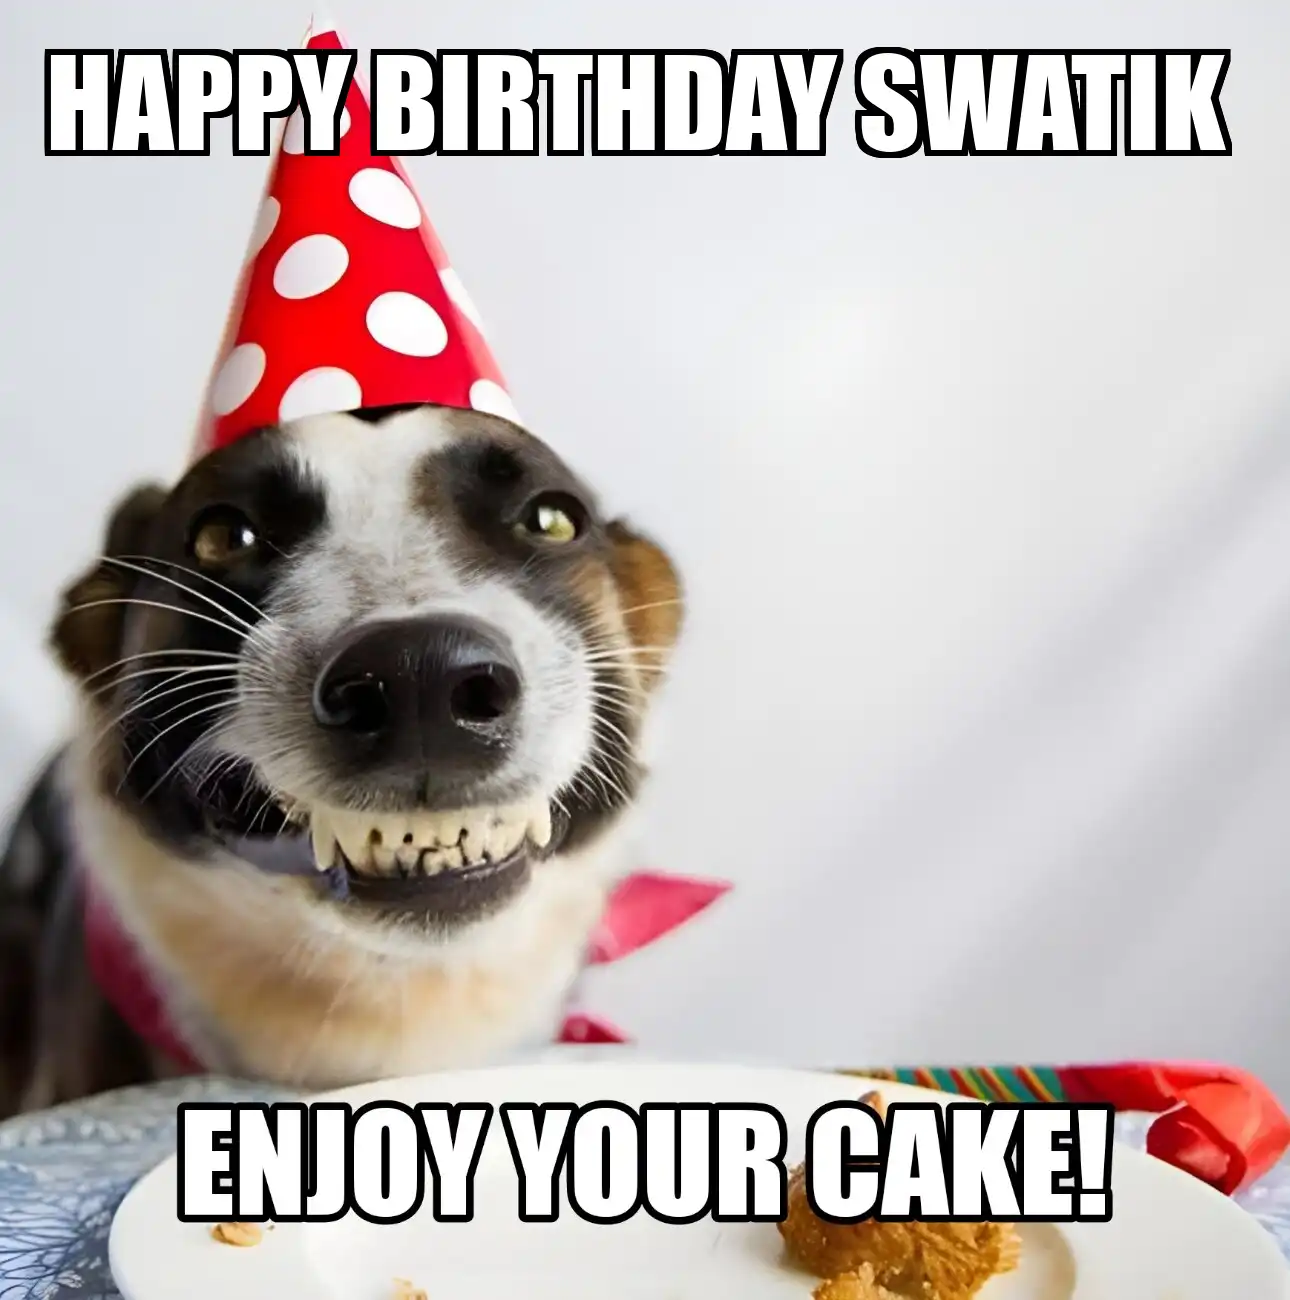 Happy Birthday Swatik Enjoy Your Cake Dog Meme